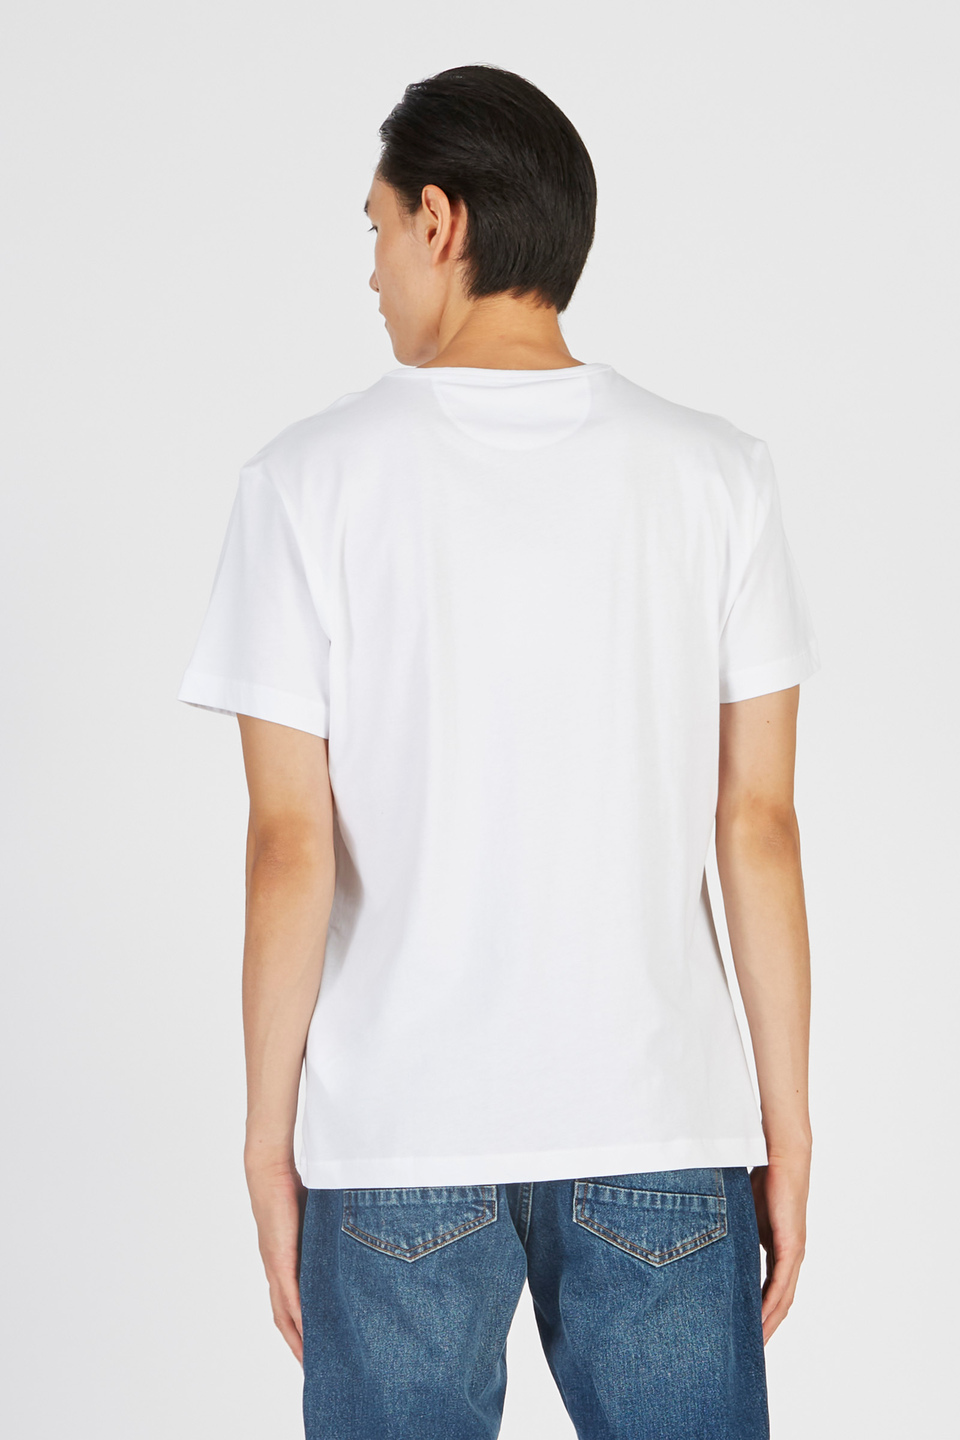 Men’s short-sleeved 100% comfort fit cotton t-shirt | La Martina - Official Online Shop